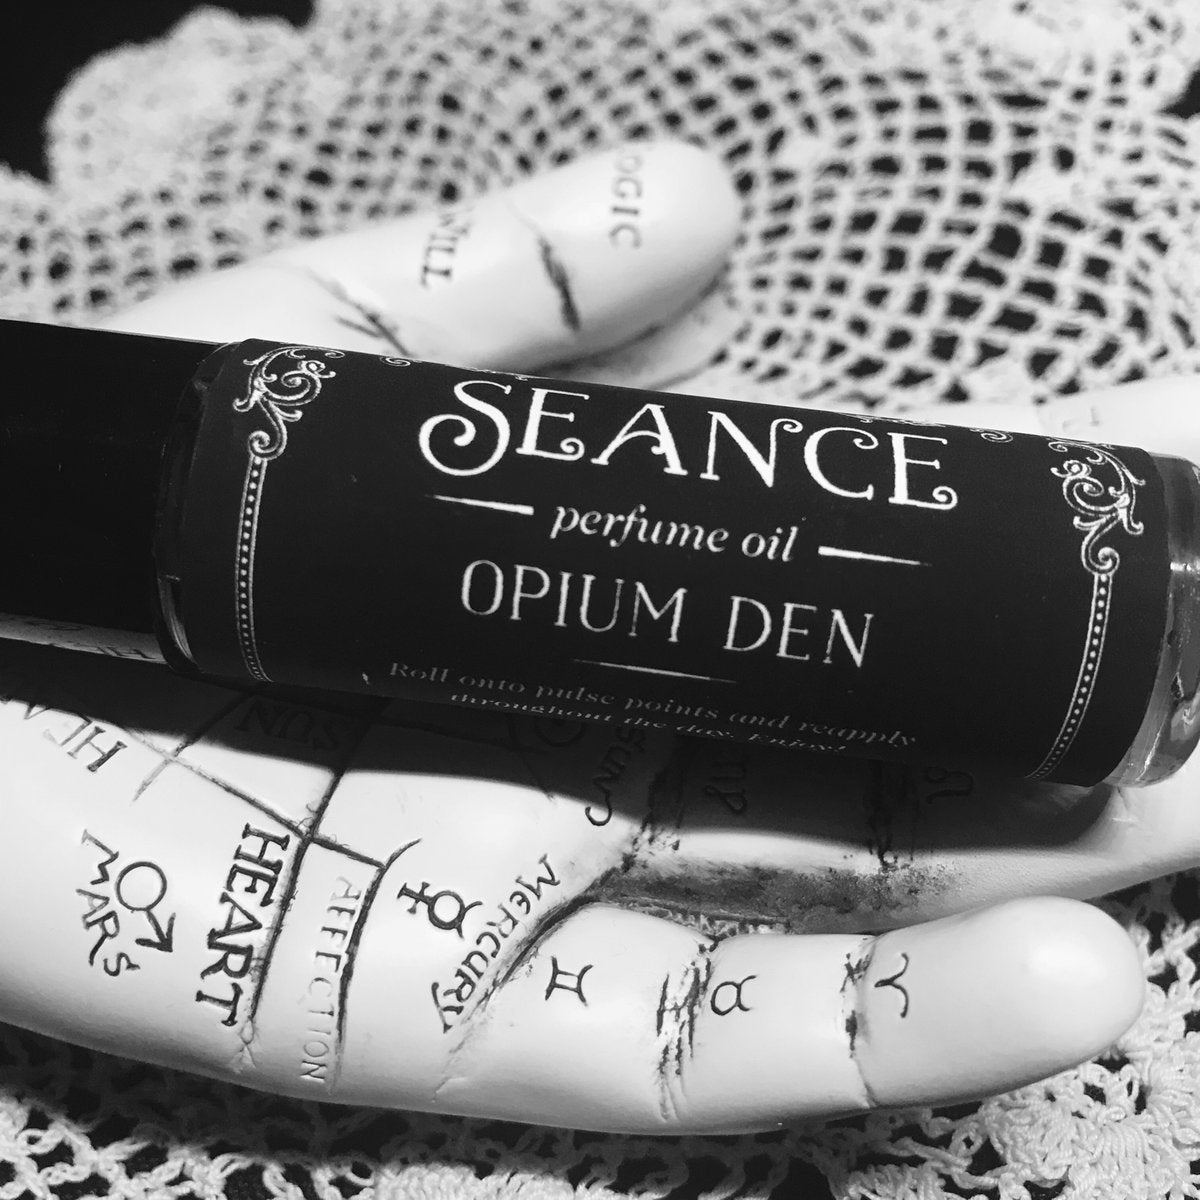 Opium Den perfume